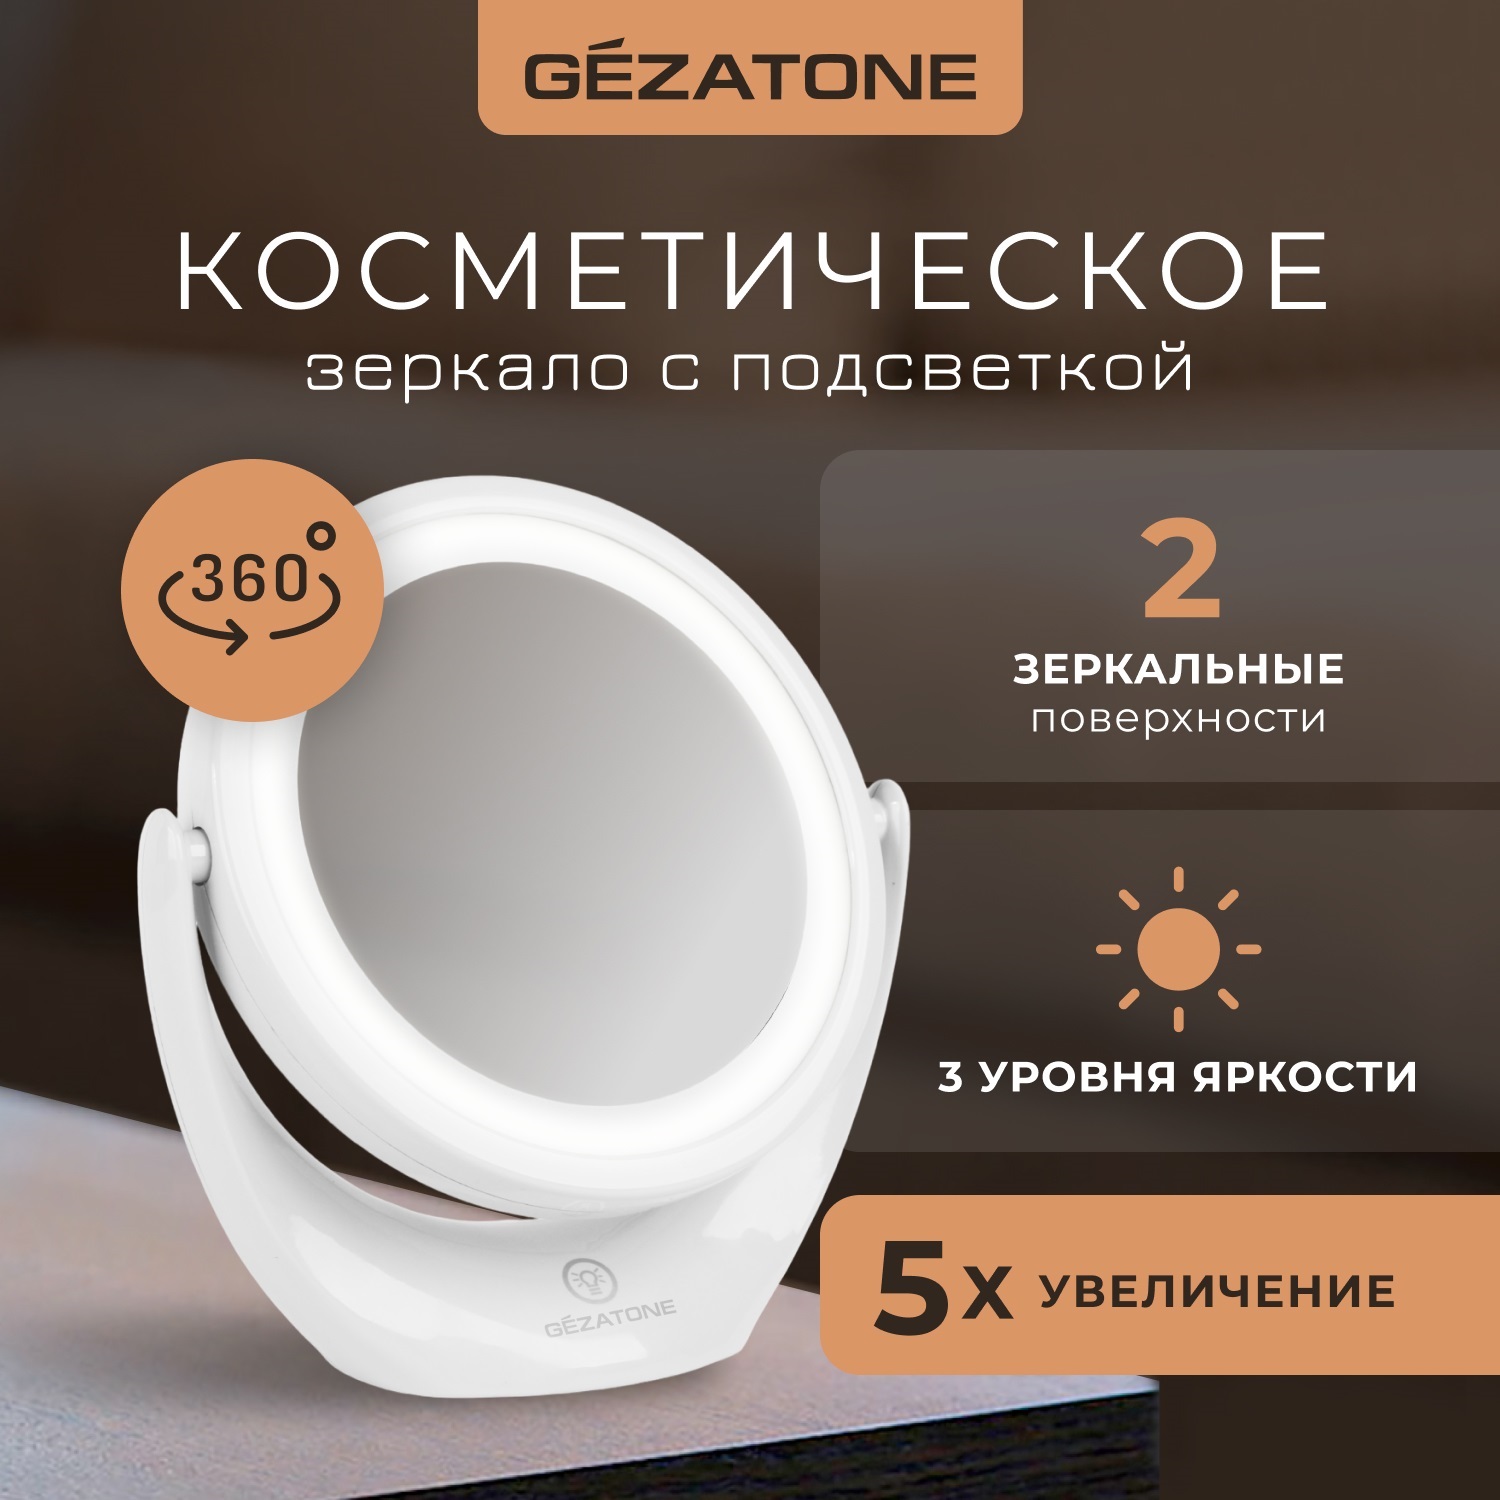 Gezatone Косметическое зеркало с 5х увеличением и подсветкой LM110. фото